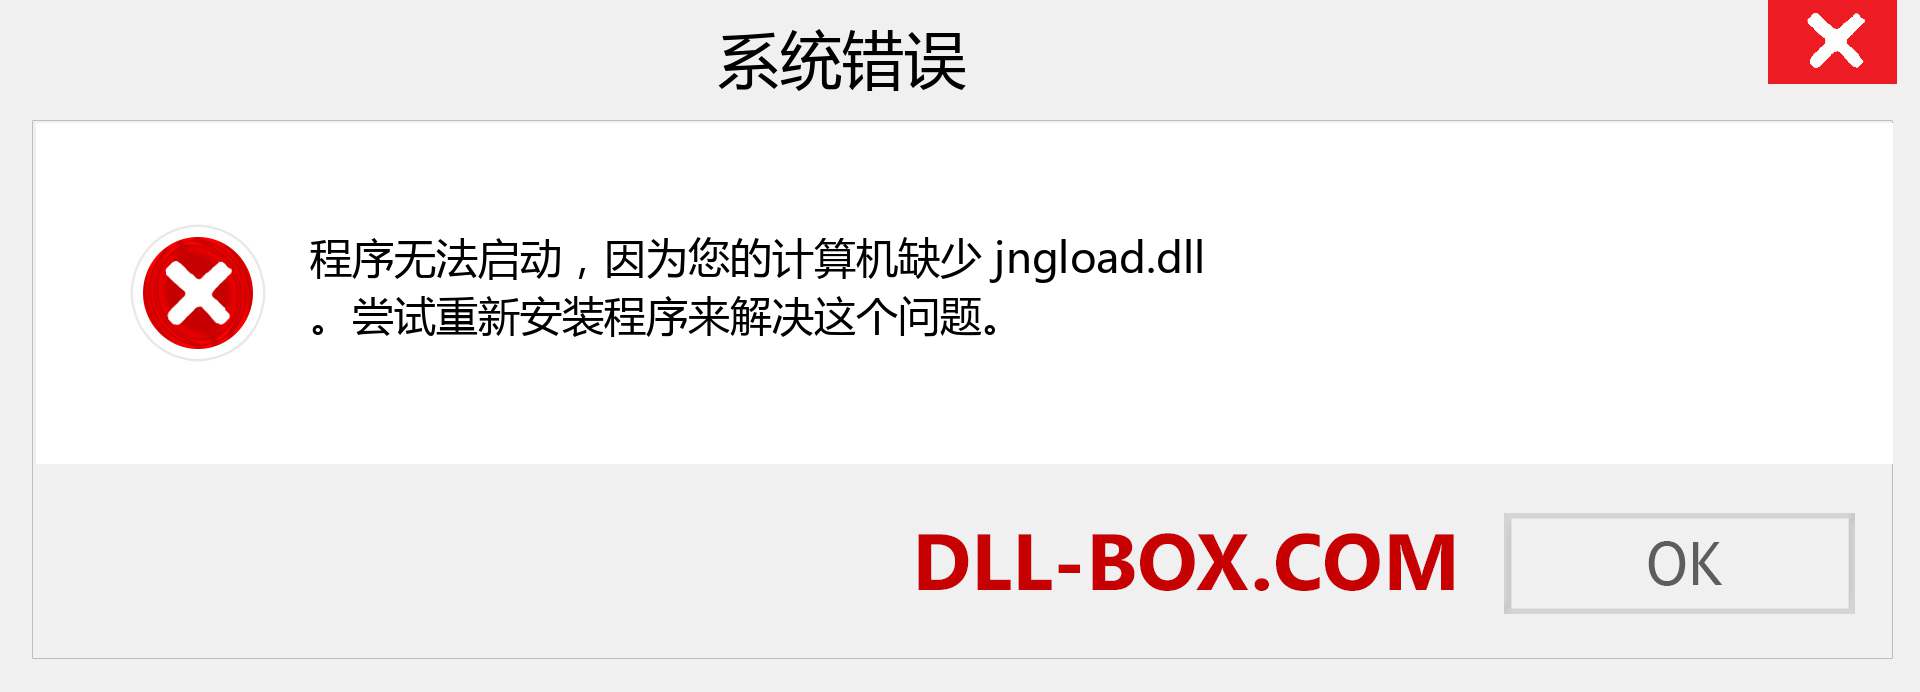 jngload.dll 文件丢失？。 适用于 Windows 7、8、10 的下载 - 修复 Windows、照片、图像上的 jngload dll 丢失错误